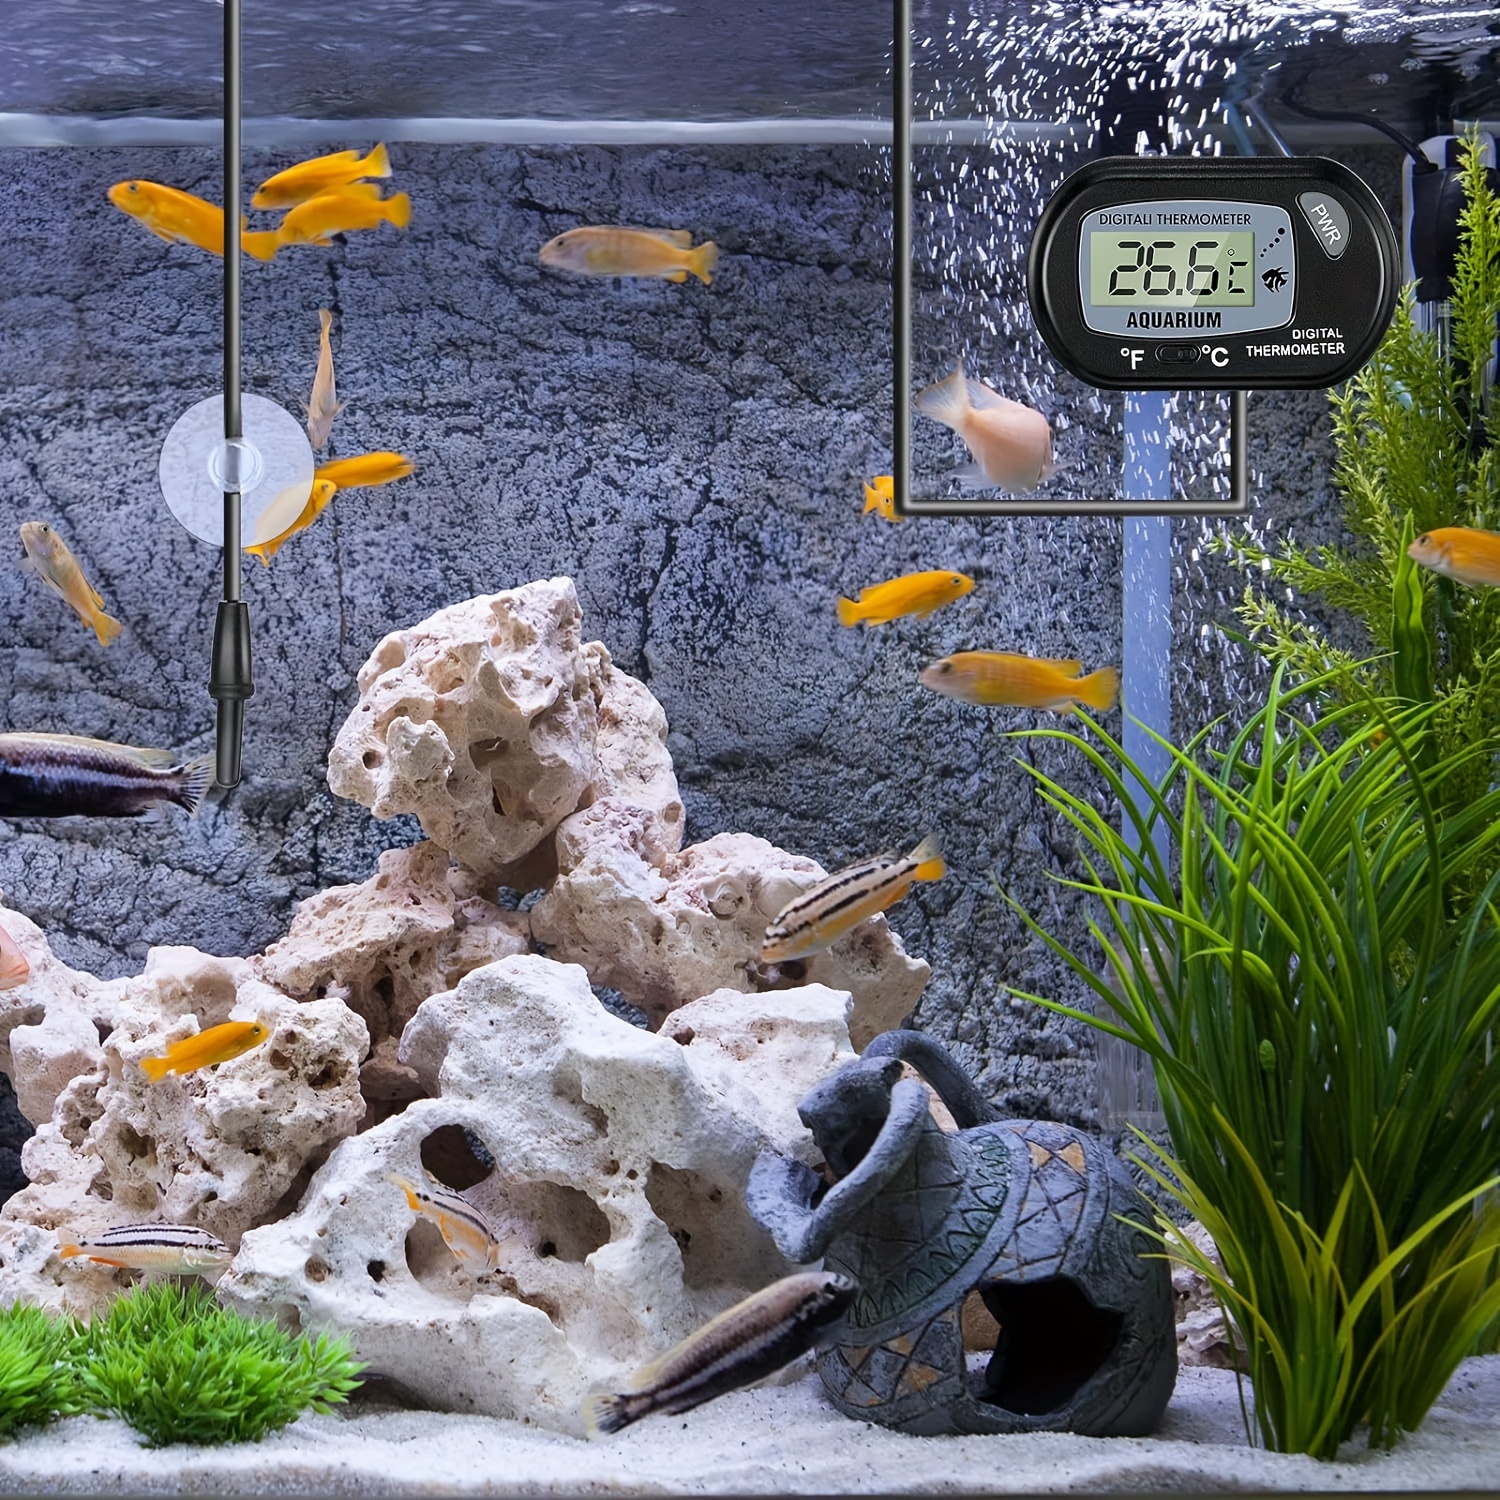 Digital Lcd Aquarium Thermometer With Suction Cups And Waterproof Probe For  Aquarium Fish Tank, Reptile Terrarium (2pcs)